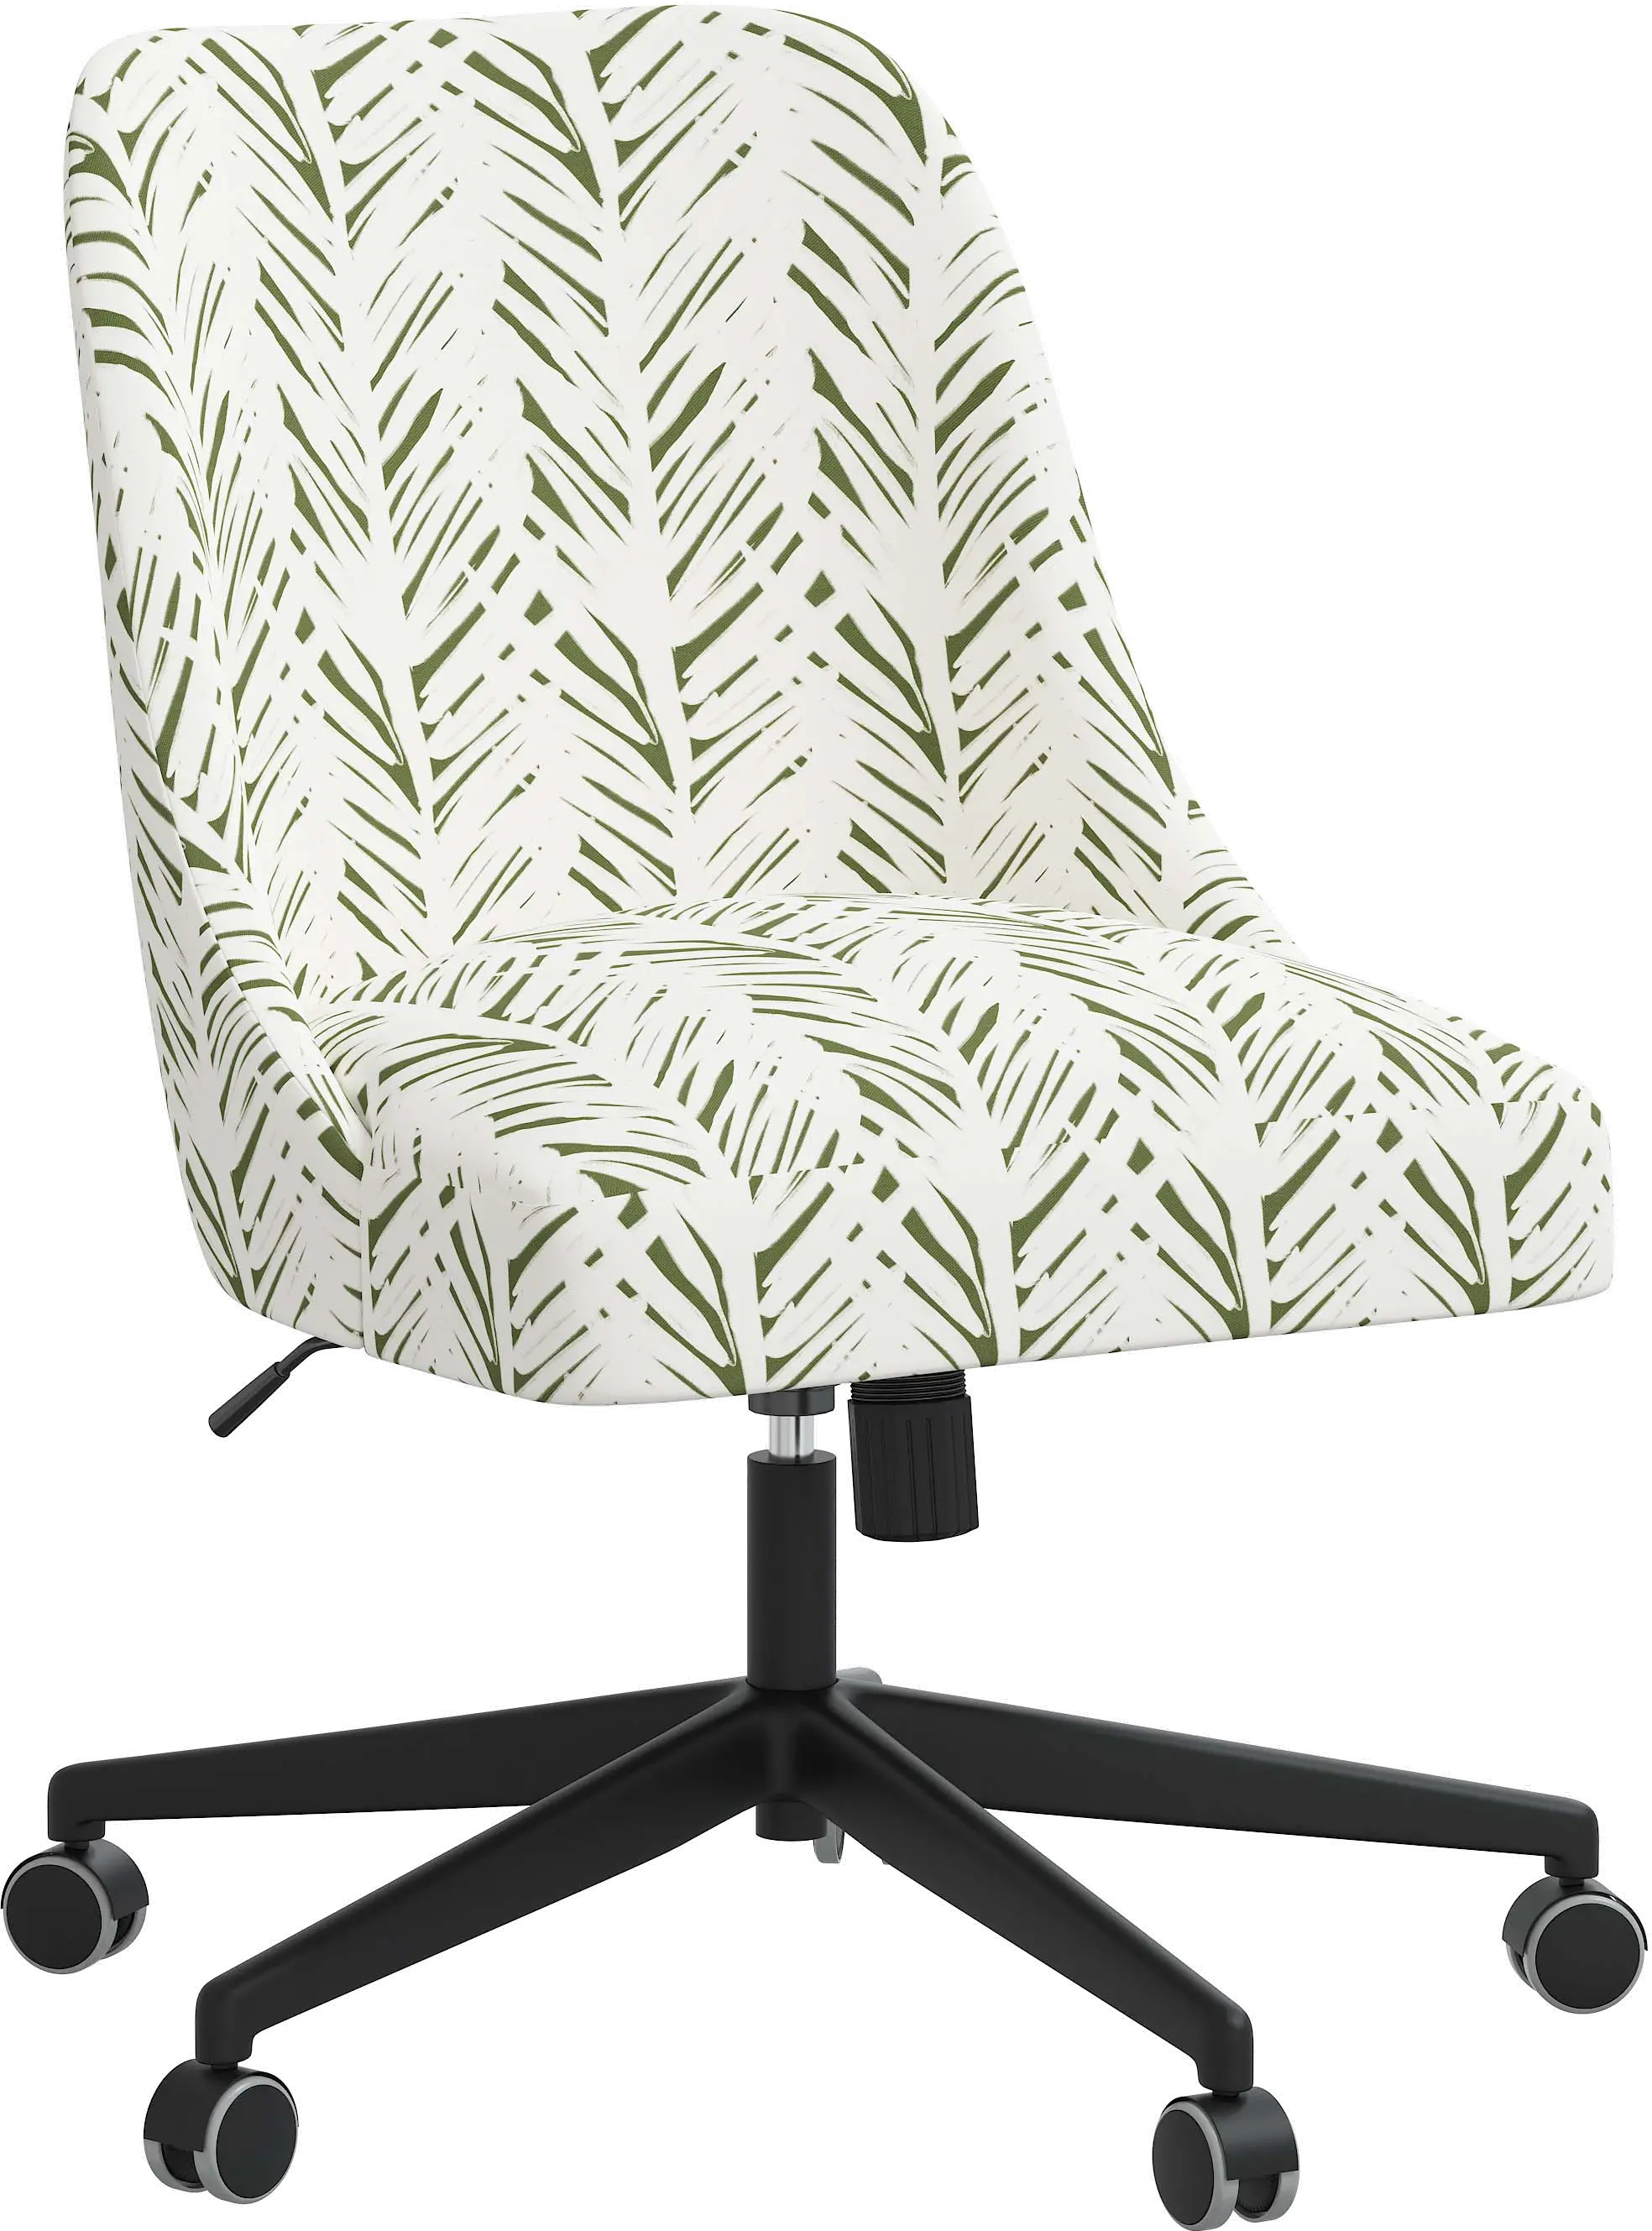 Spencer Brush Palm Leaf Office Chair - Skyline Furniture